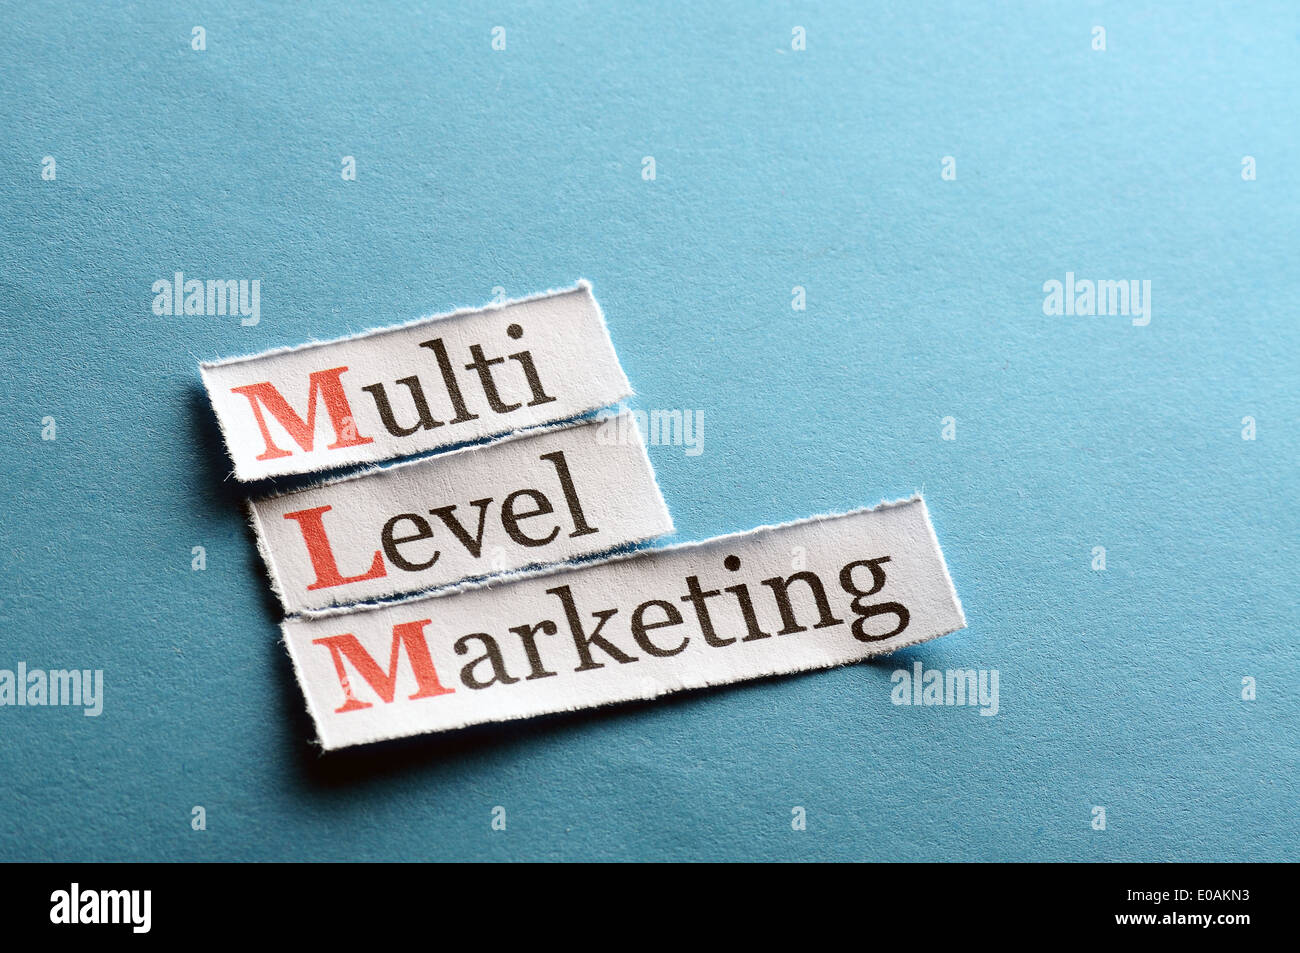 mlm - multi level marketing on blue paper Stock Photo